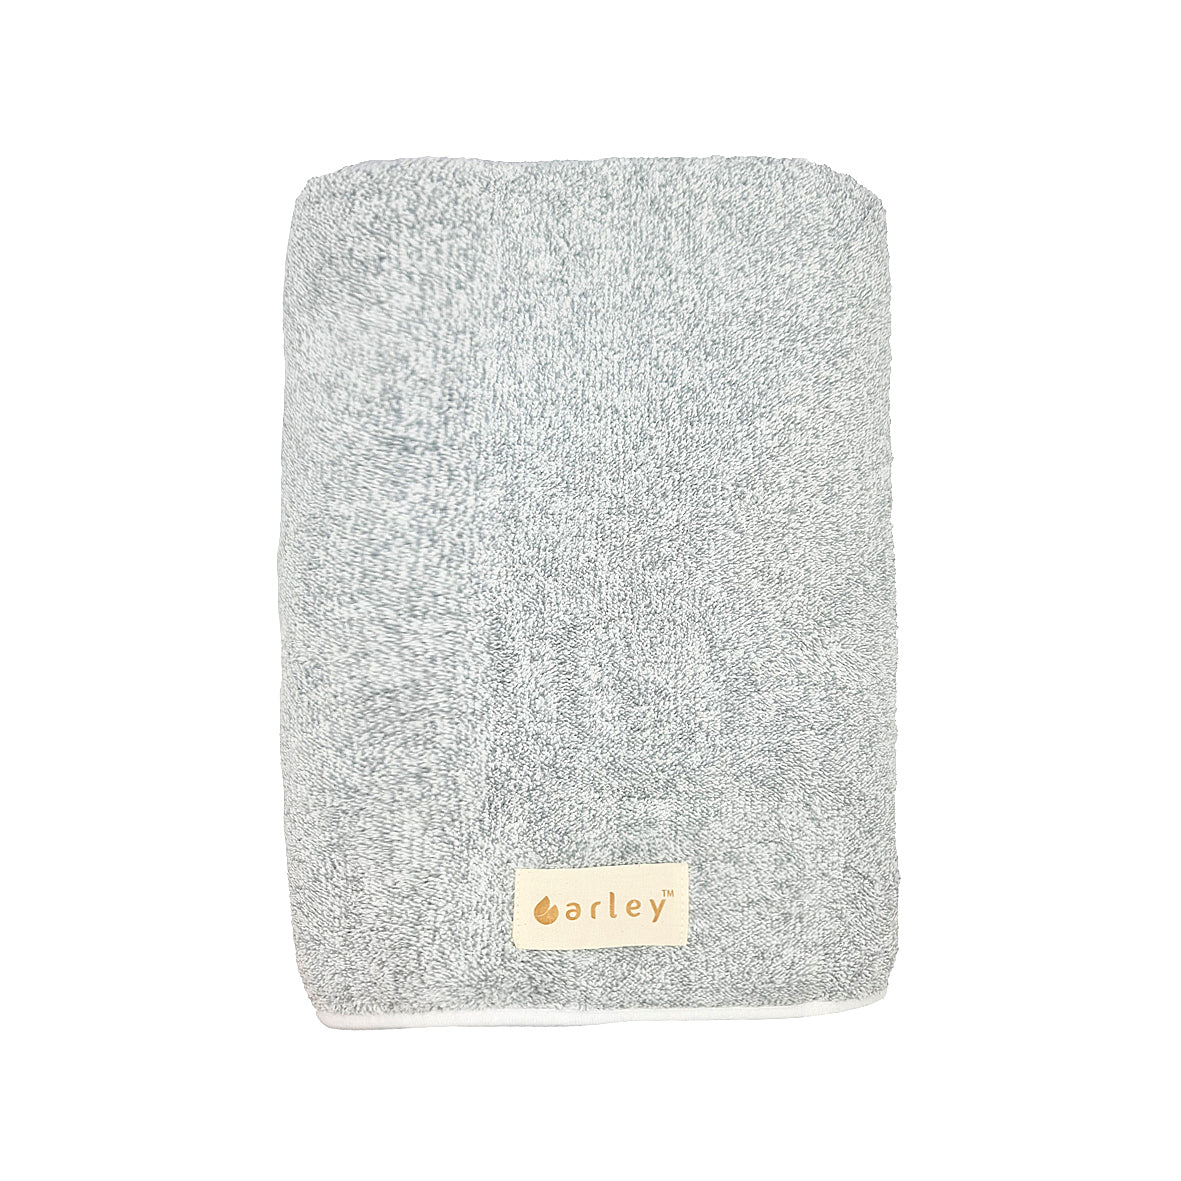 Arley Ultra Soft Coral Fleece Towel